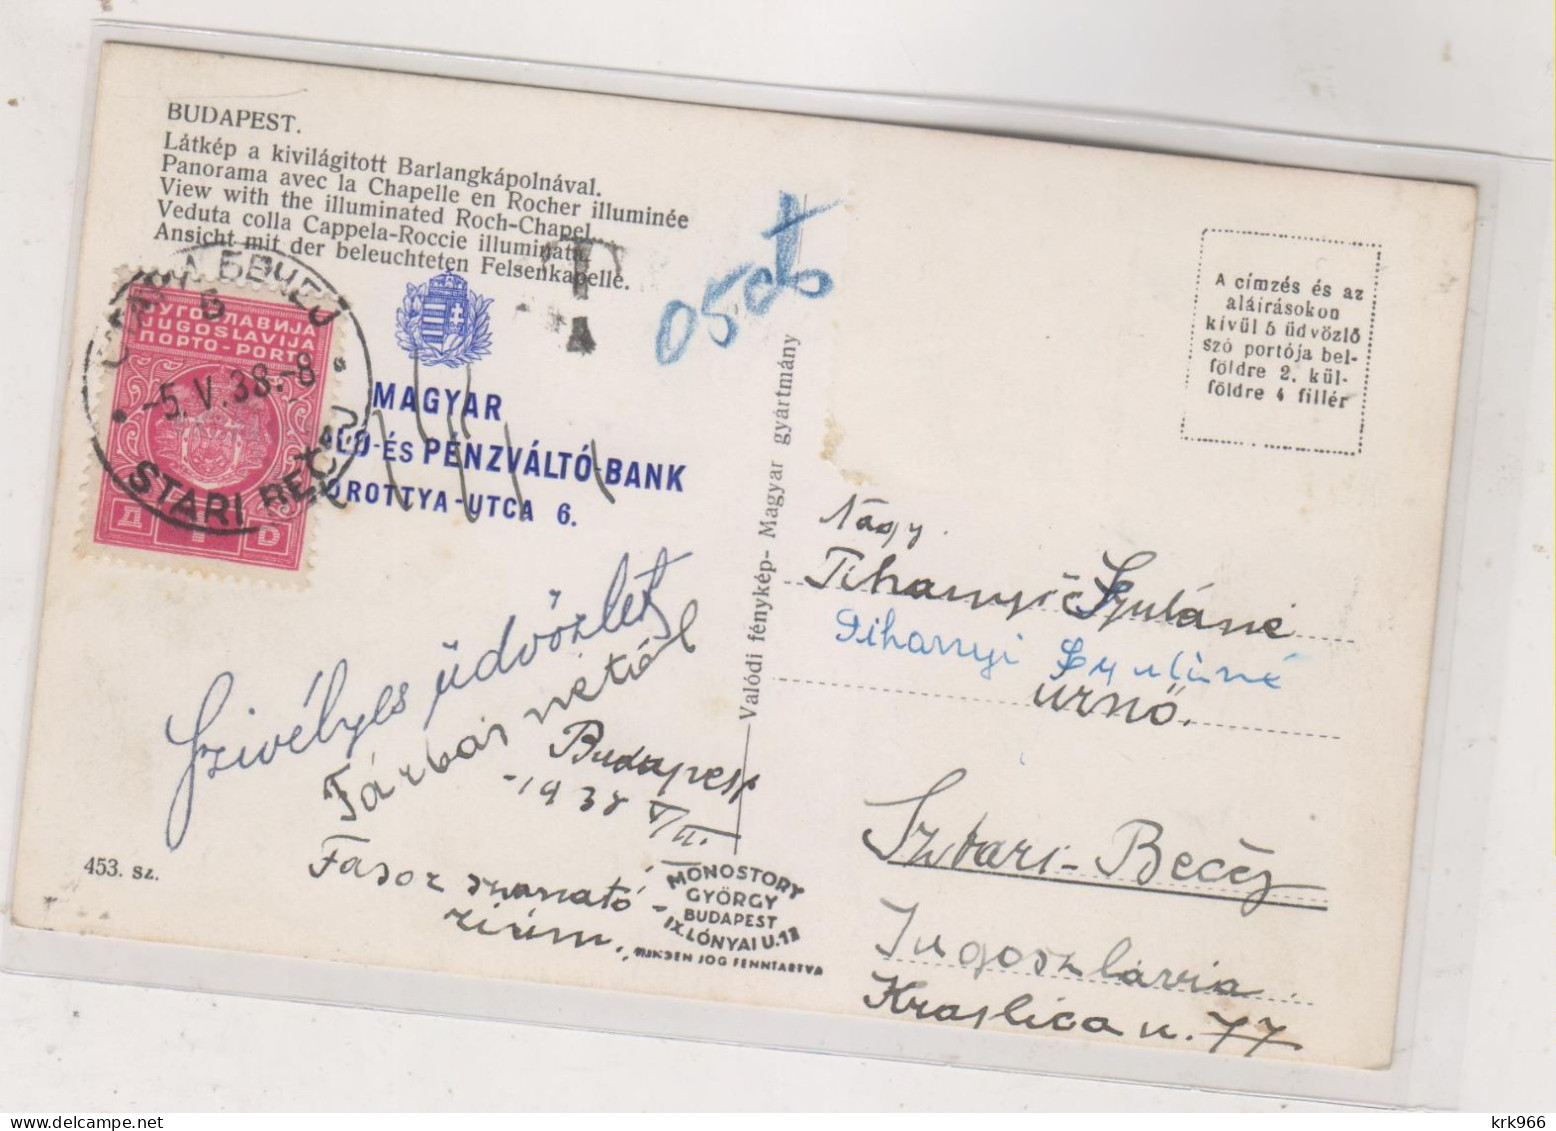 YUGOSLAVIA 1938 STARI BECEJ Postage Due On Postcard From Hungary - Postage Due